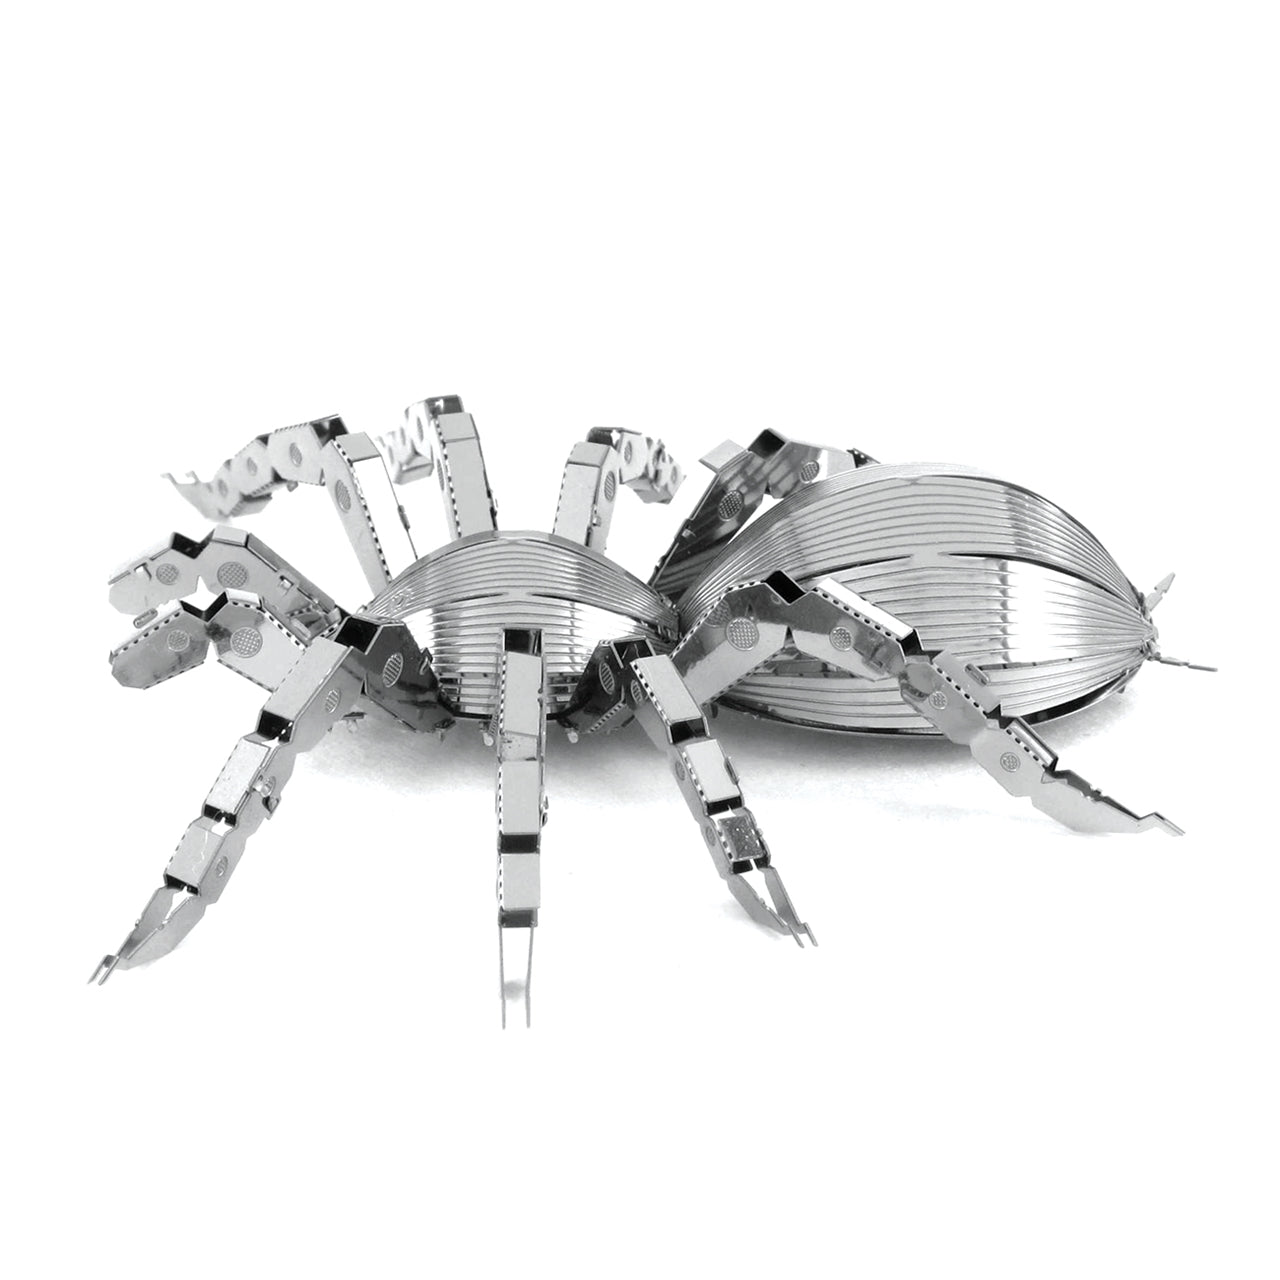 FMW072 Tarantula (Buildable) (Discontinued Model) 